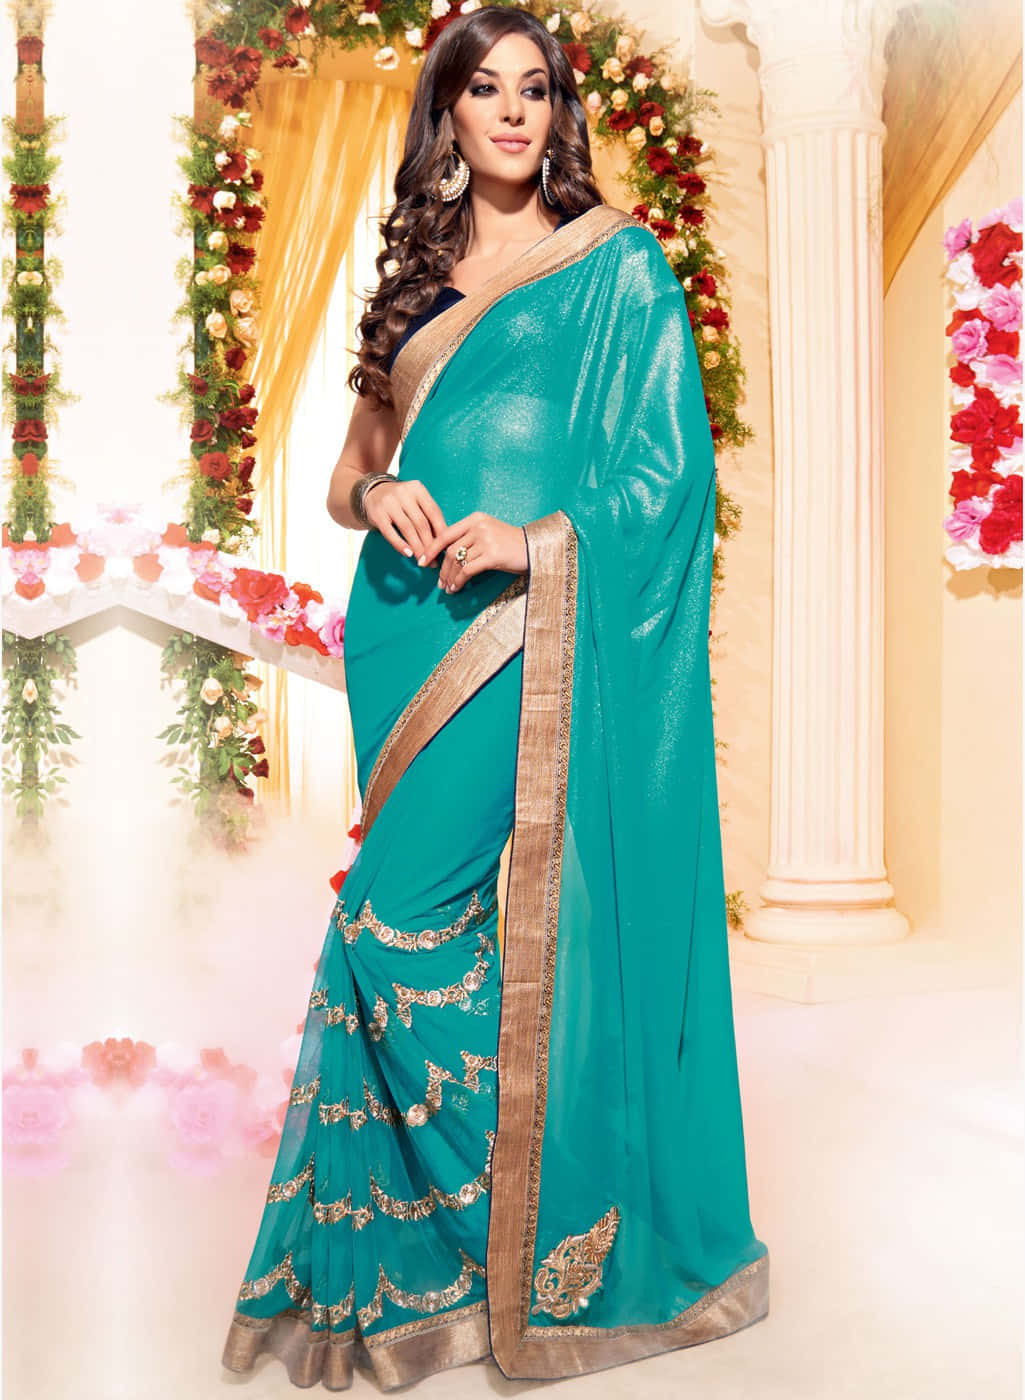 A Beautiful Woman In A Turquoise Sari